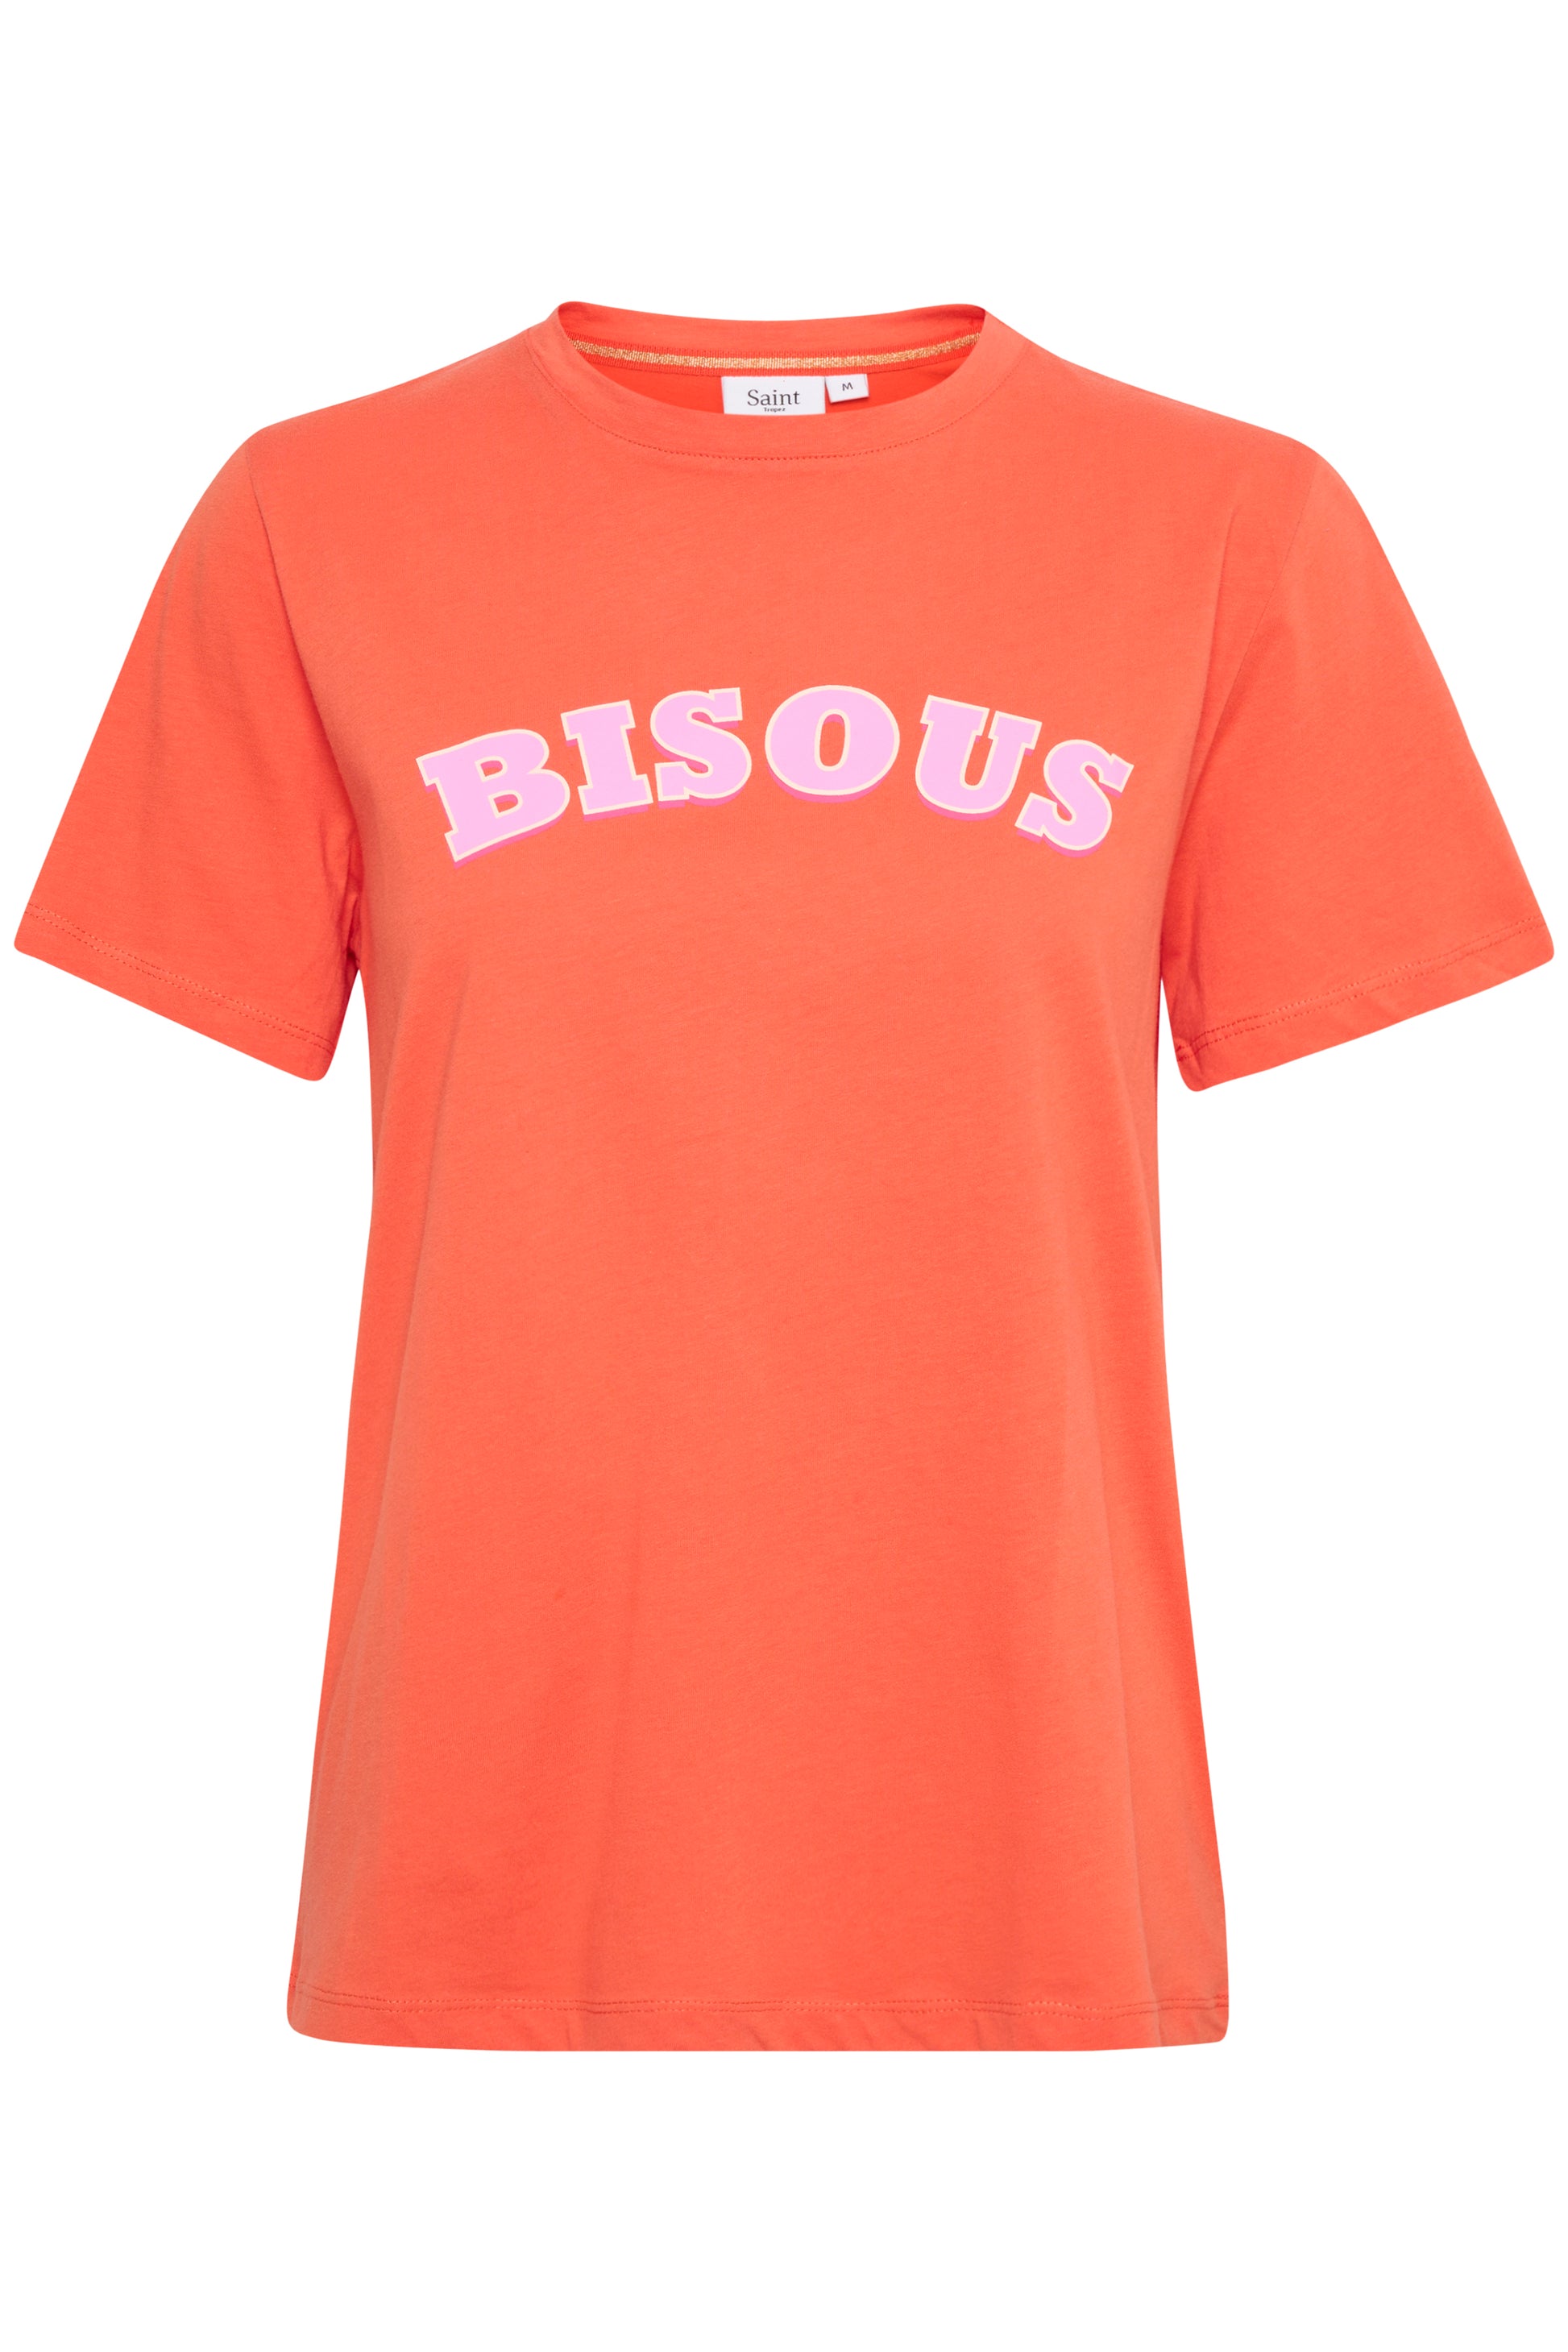 Saint Tropez DajliSZ T-Shirt in Tiger Lily Orange with Bisous slogan